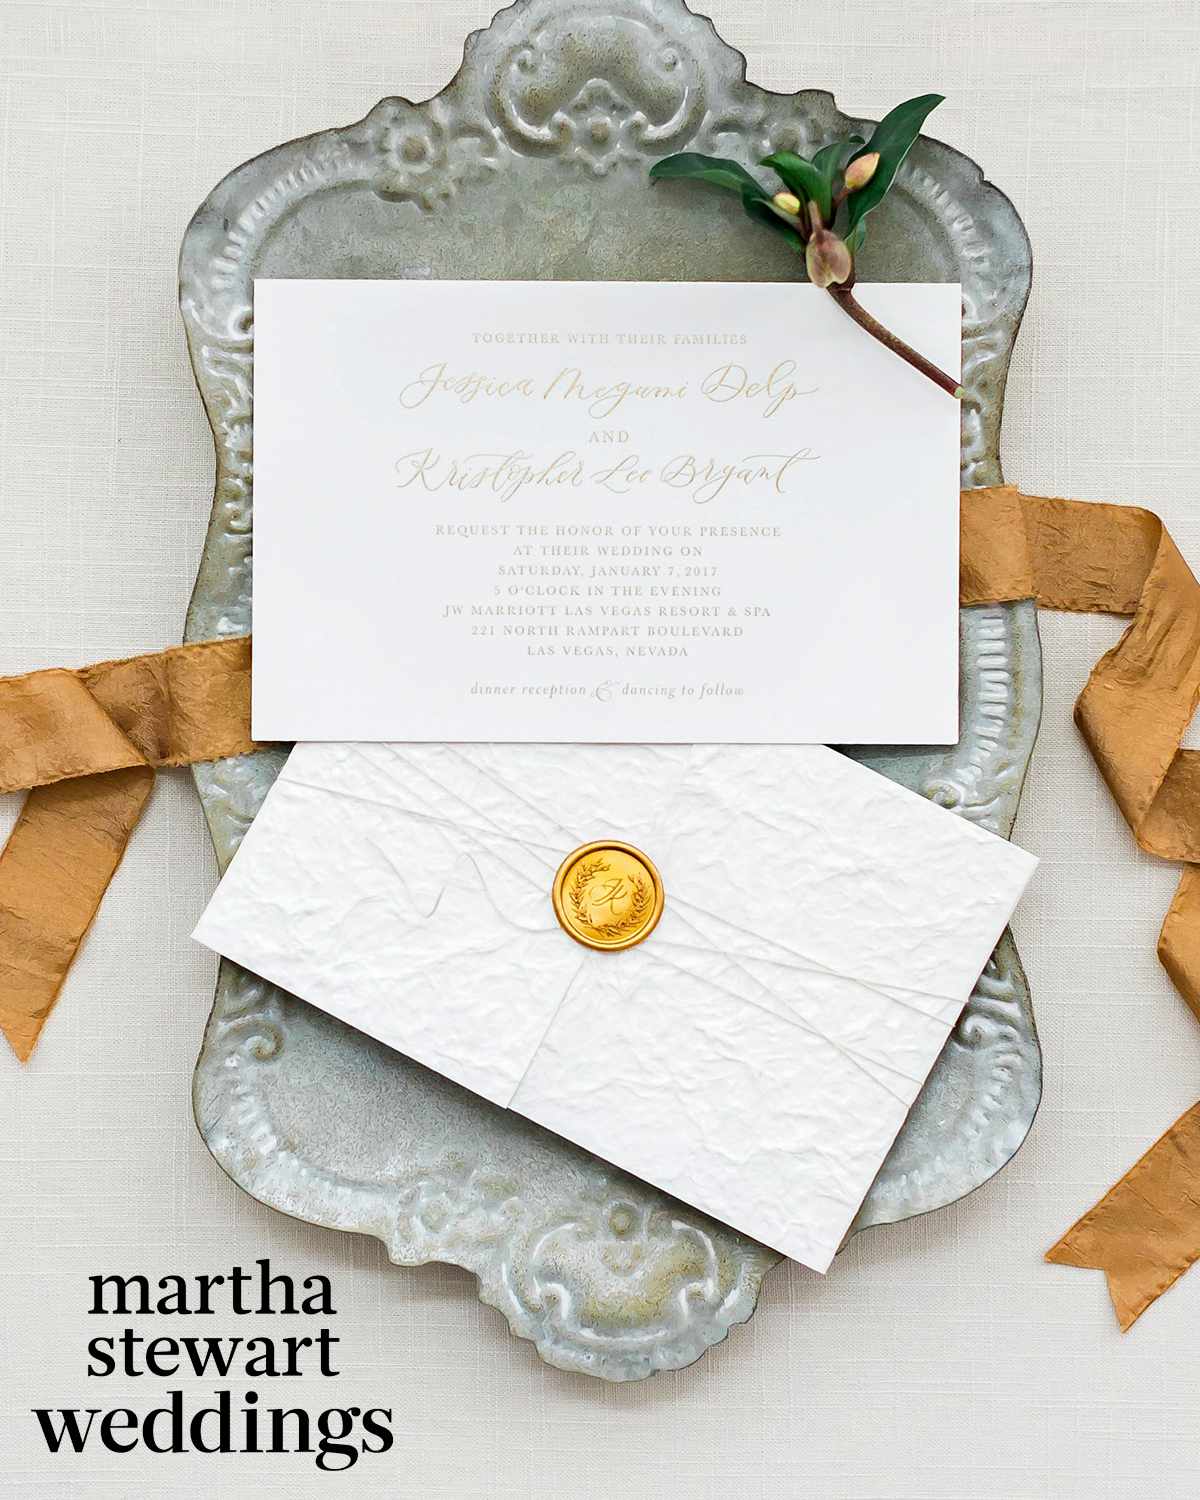 jessica and kris bryant wedding invitation